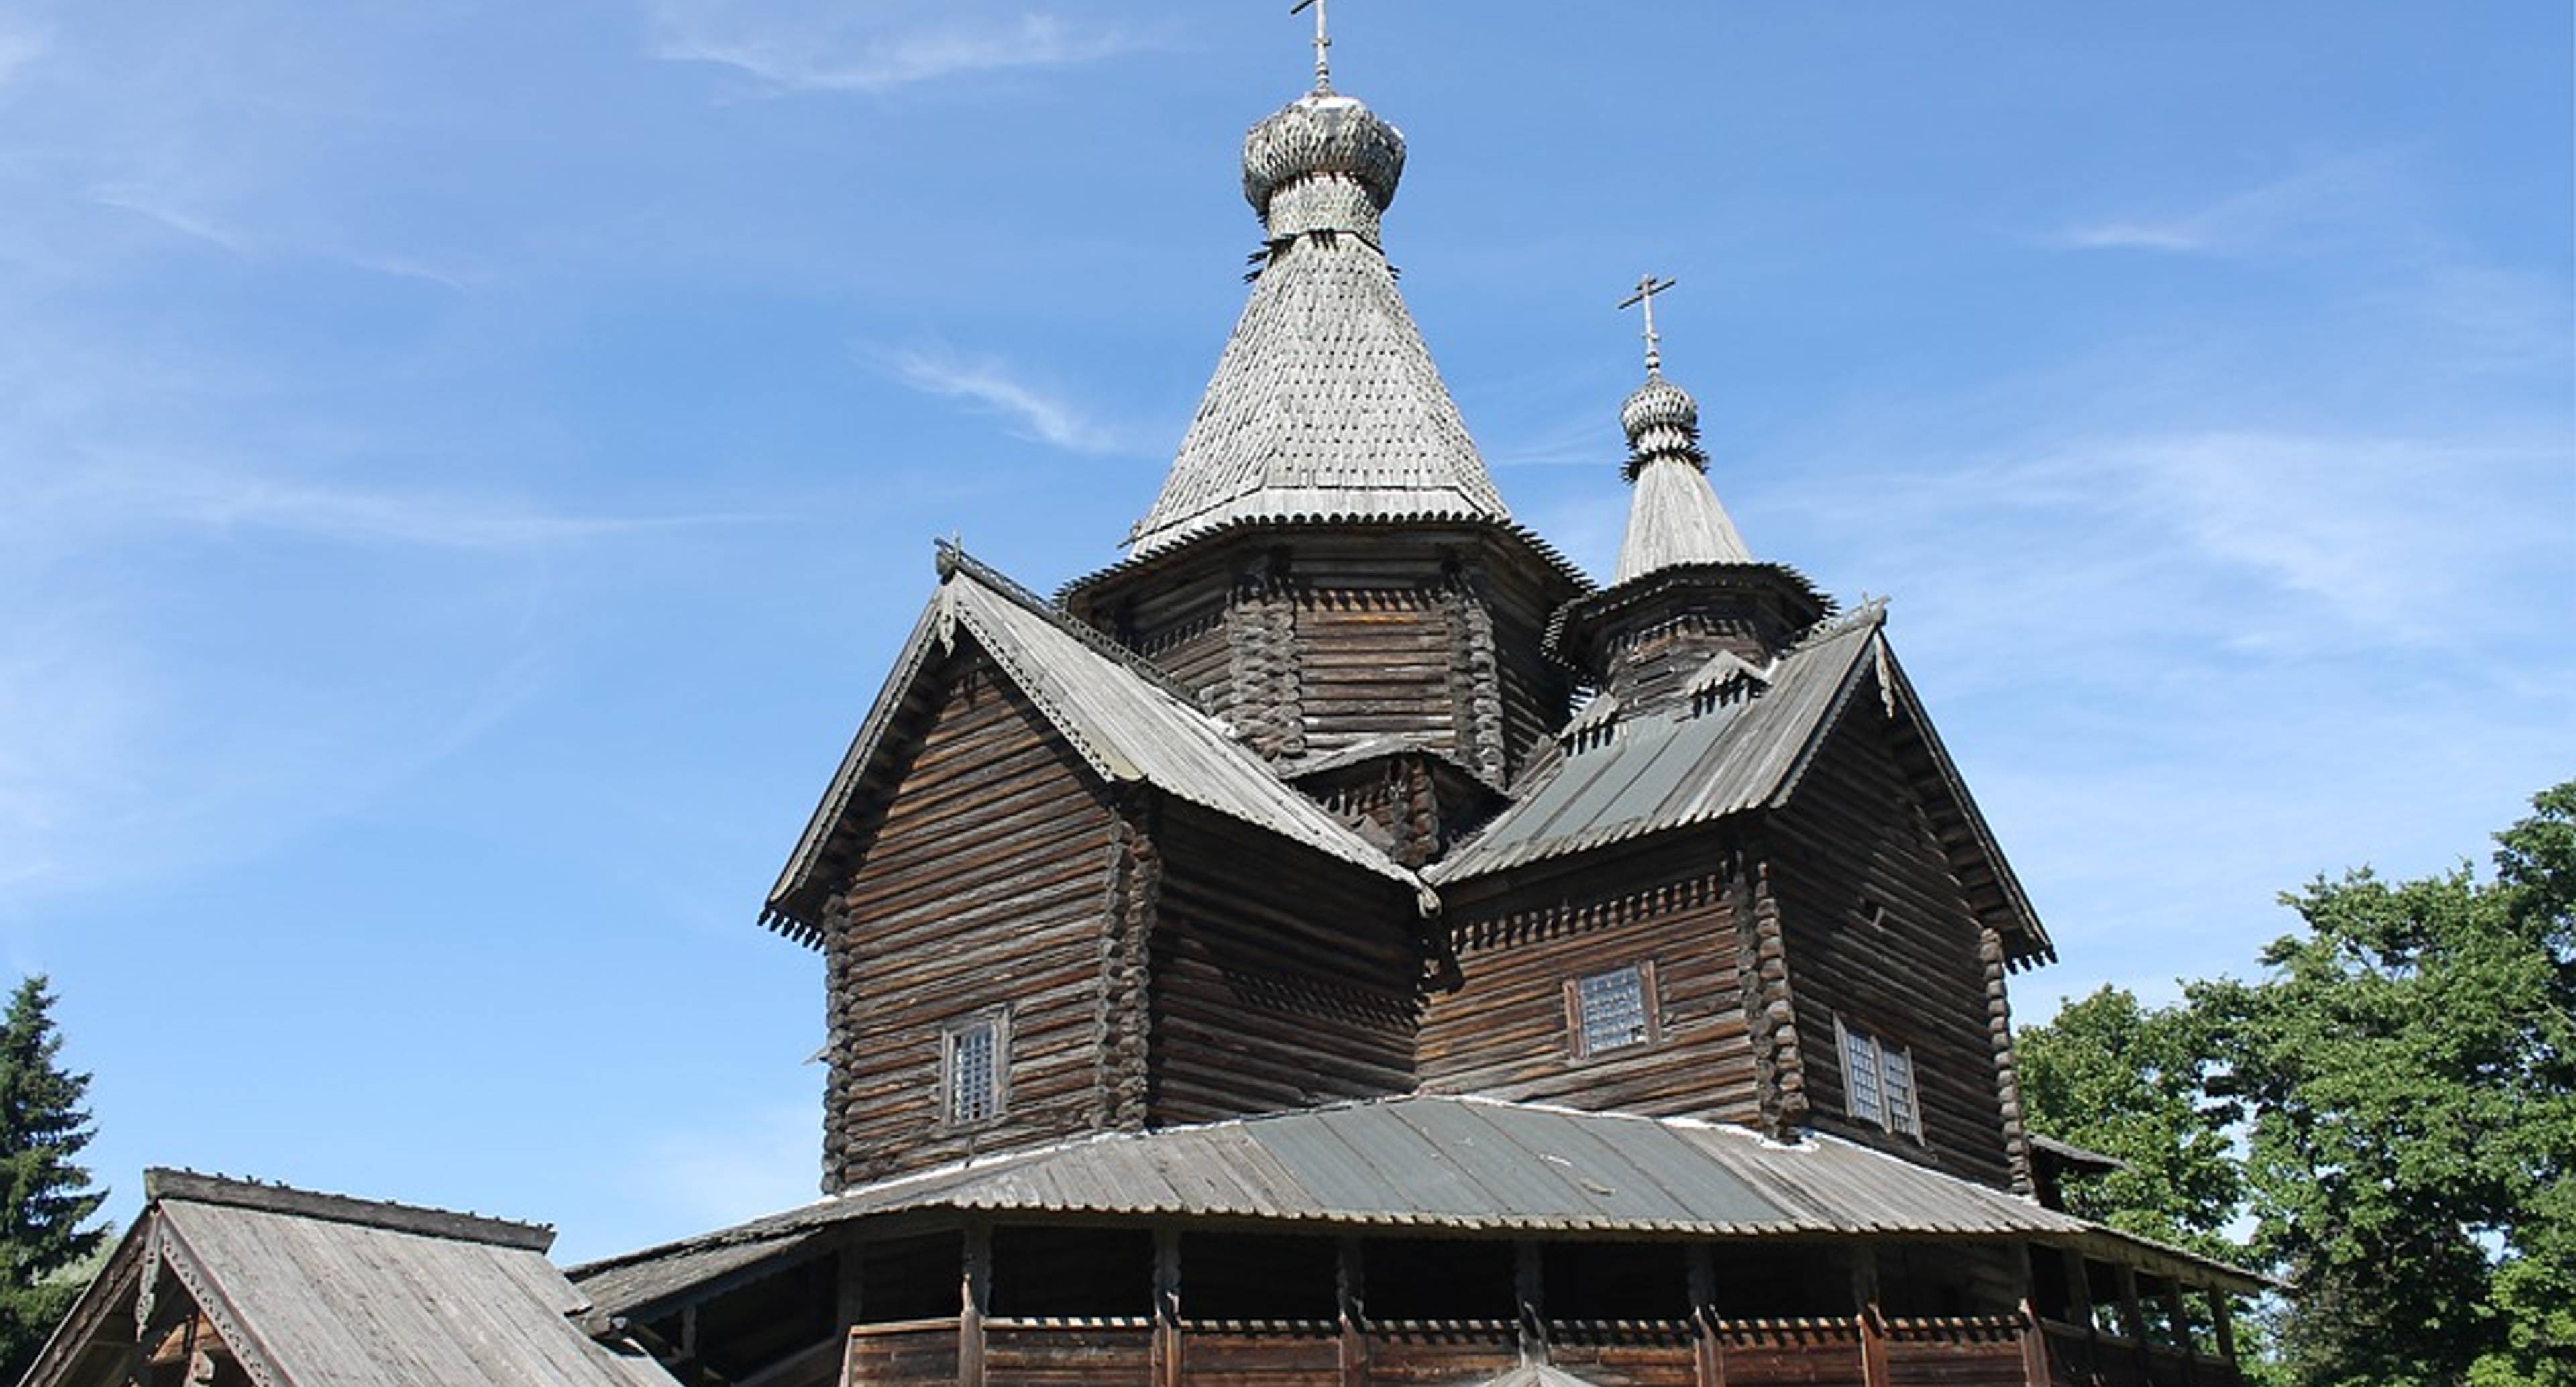 Ancient Russian architecture of Novgorod region